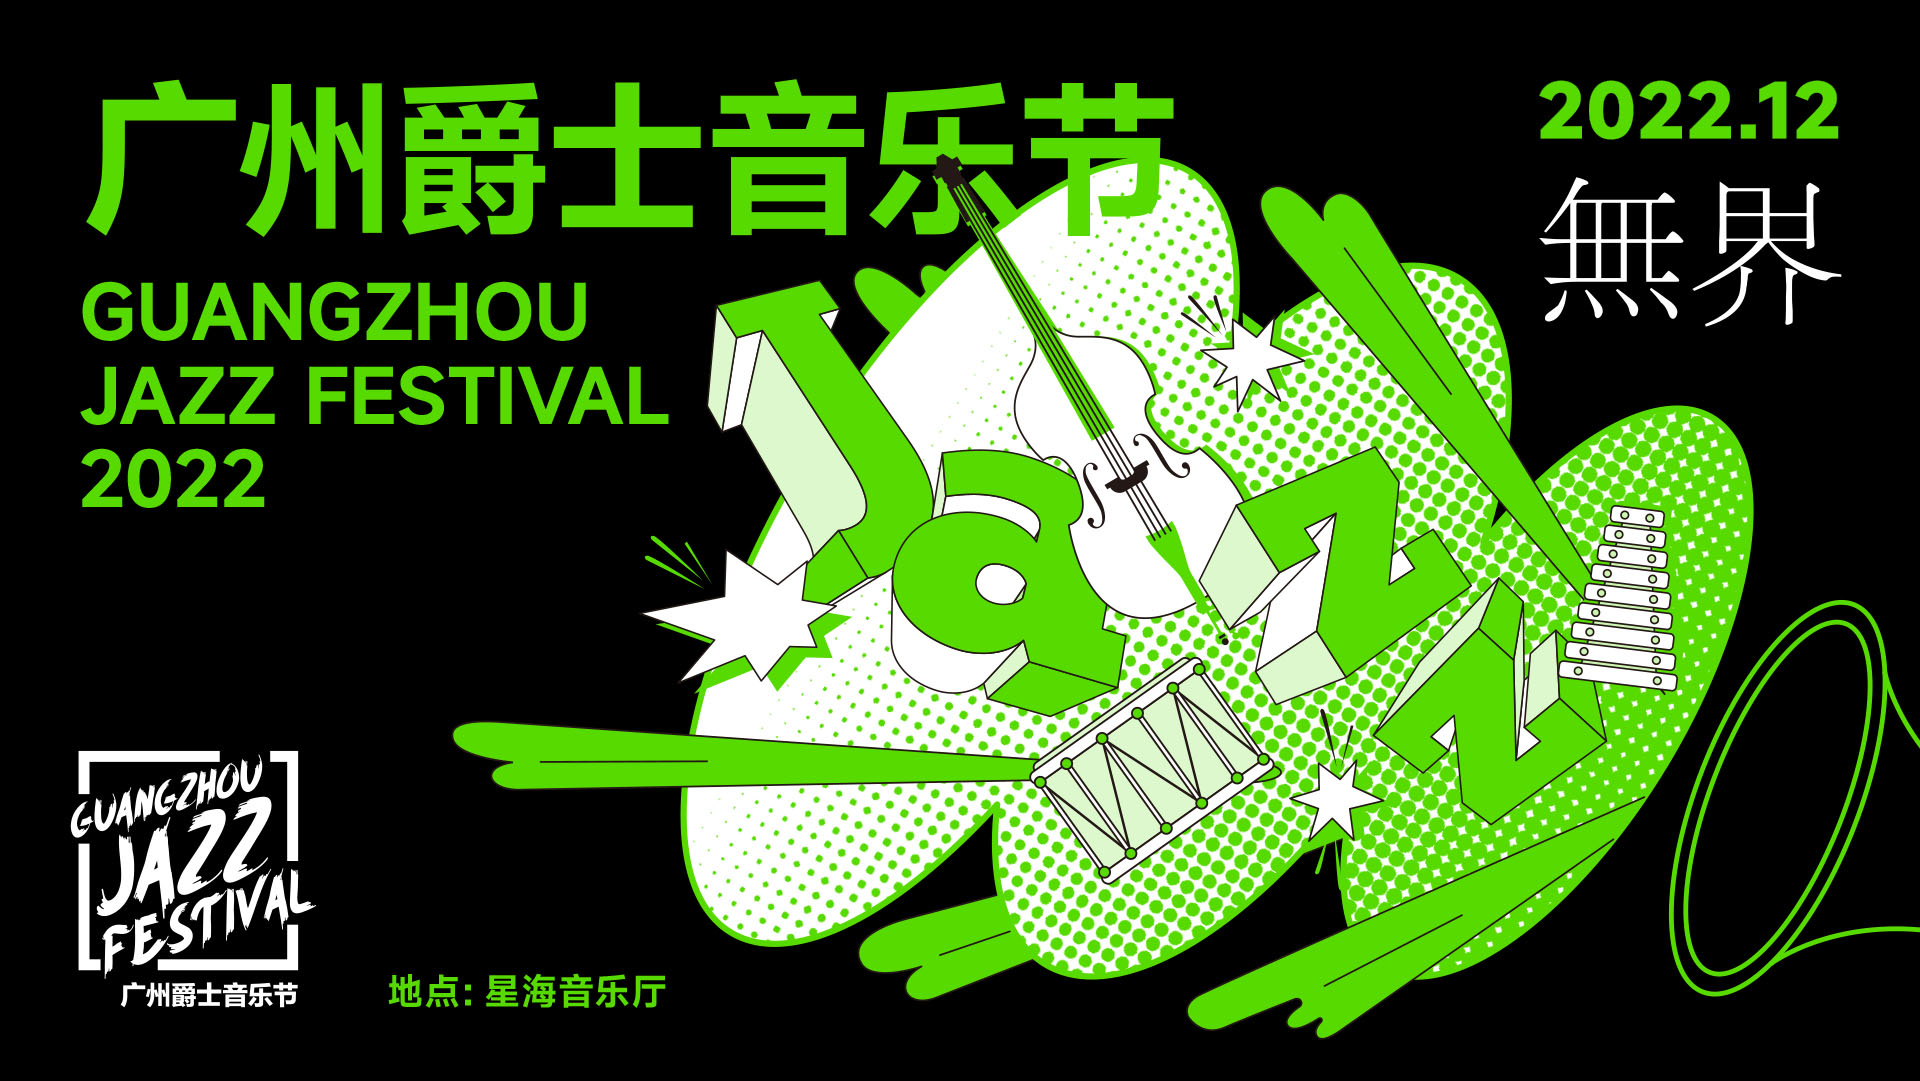 Guangzhou Jazz Festival 2022 on Ersha Island